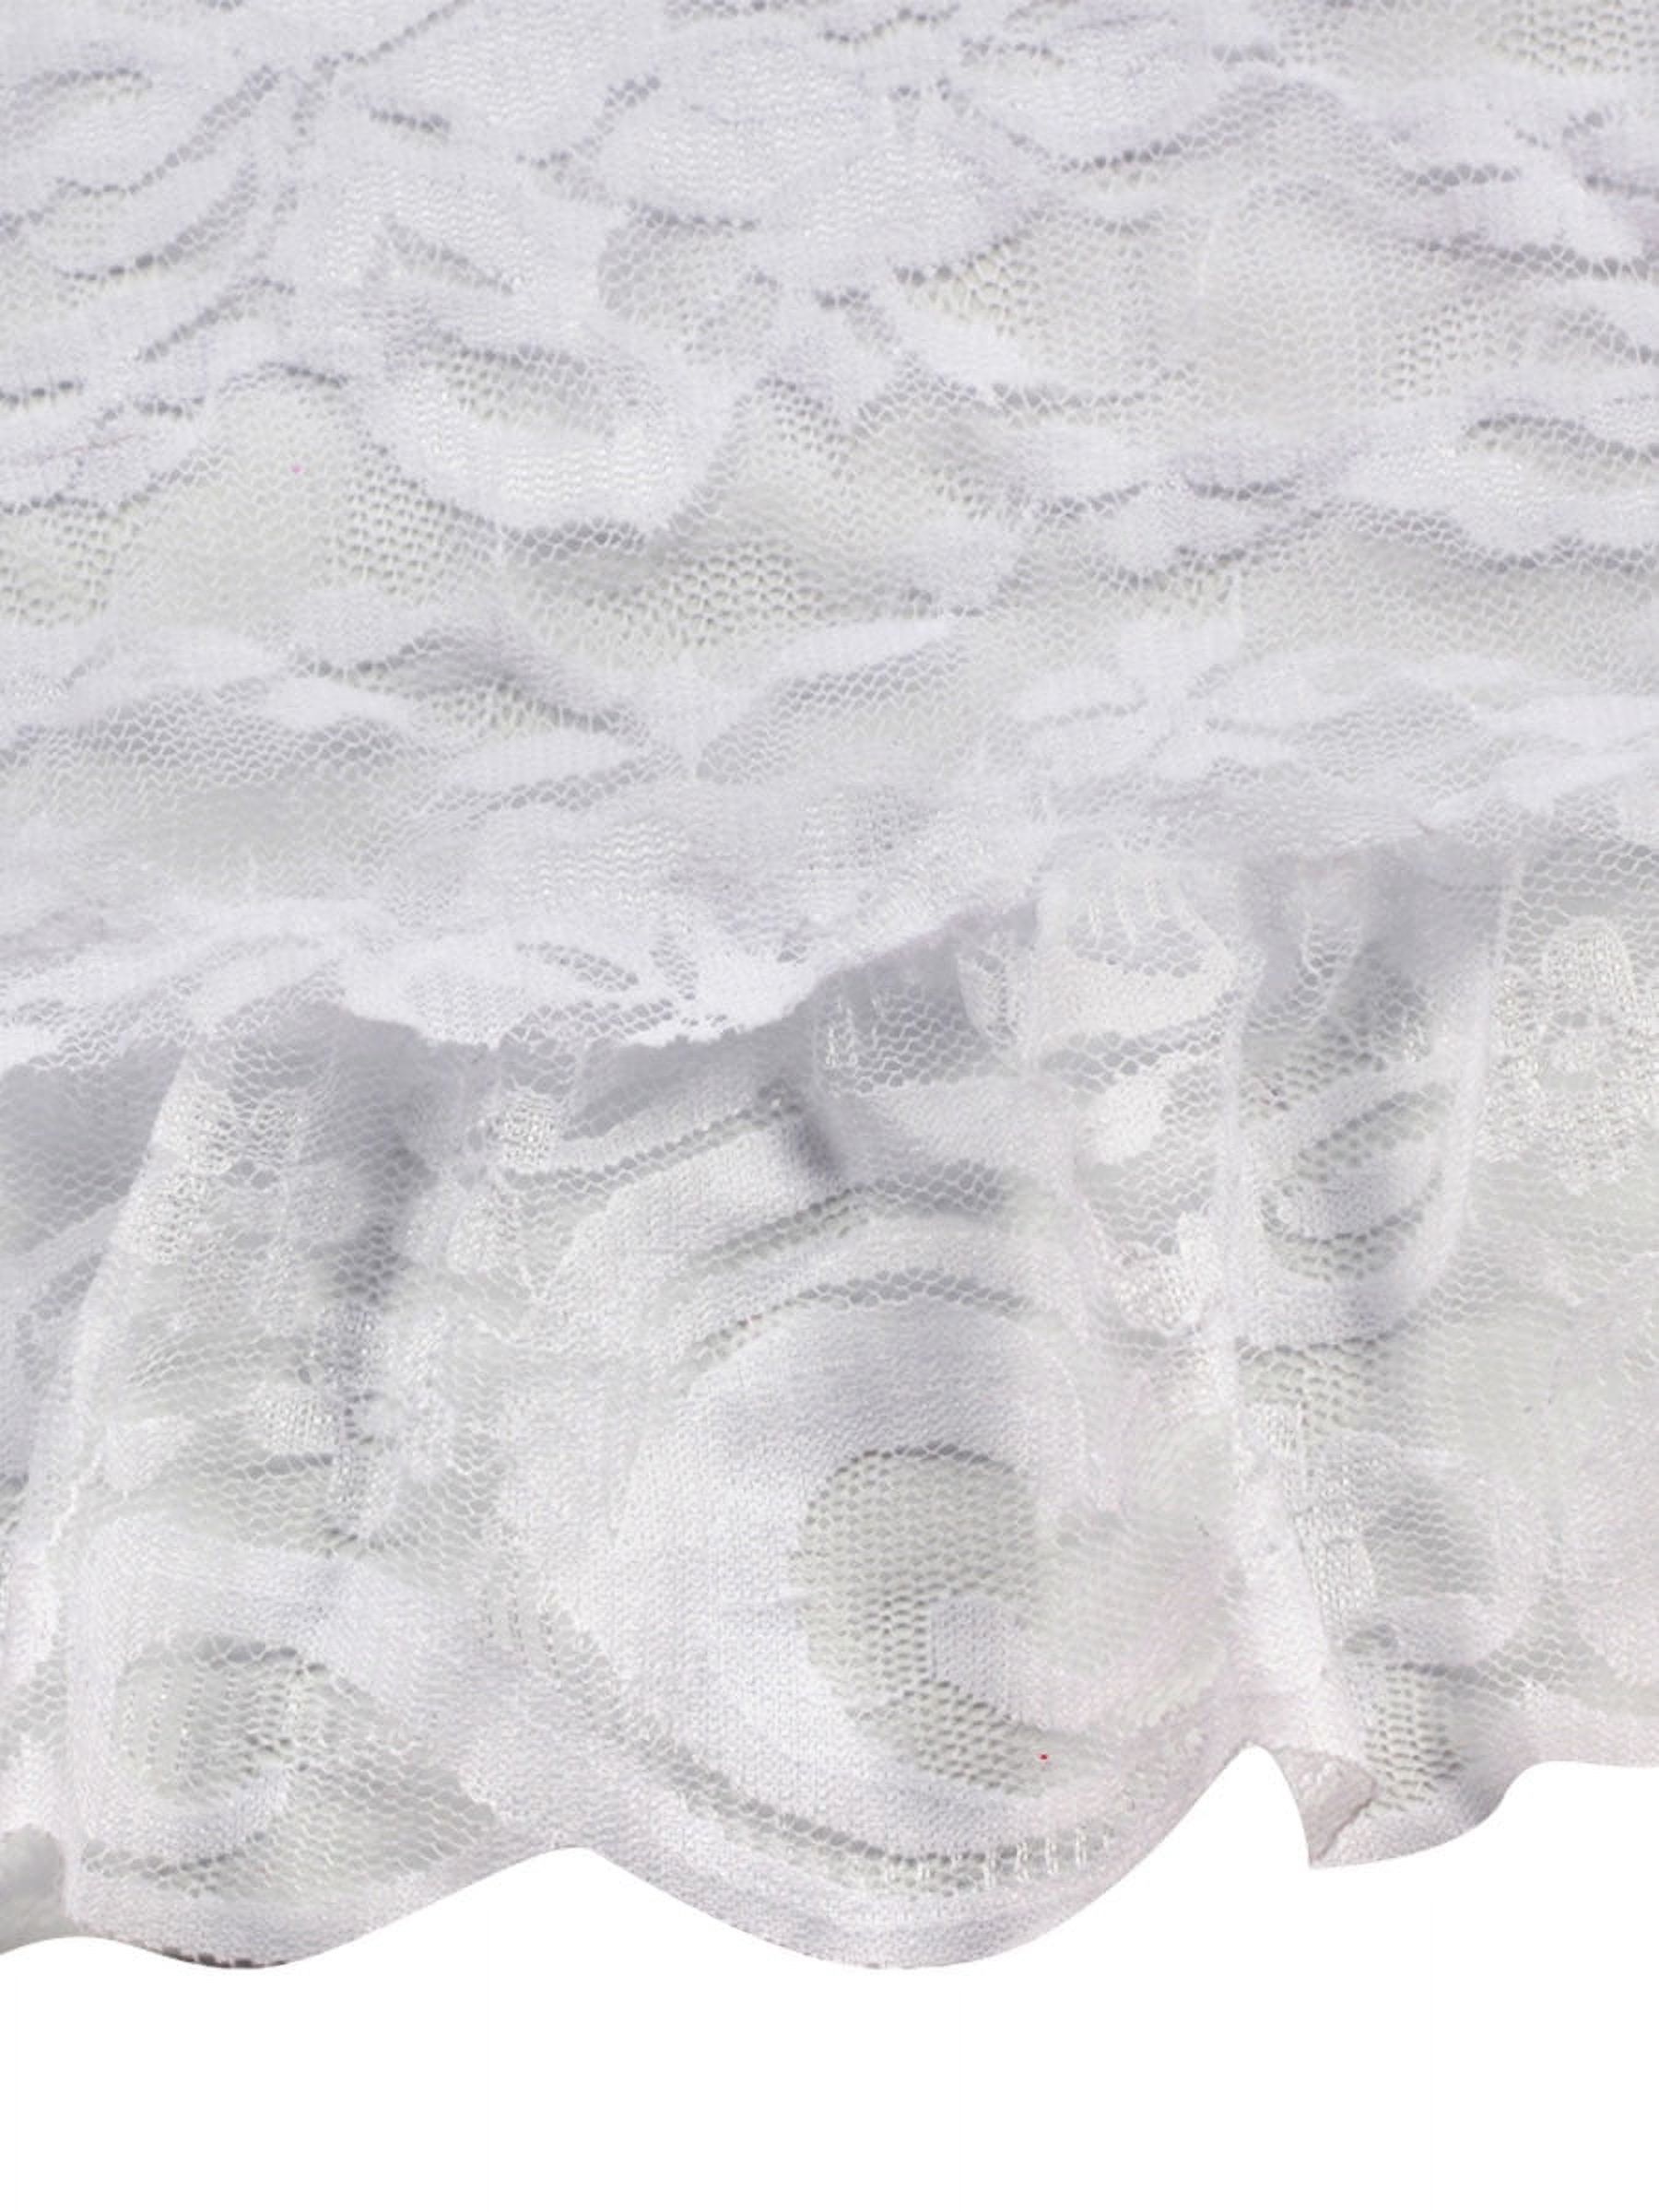 STARVNC Womens Chemise Lace Lingerie Babydoll Dress Sleepwear - image 5 of 6